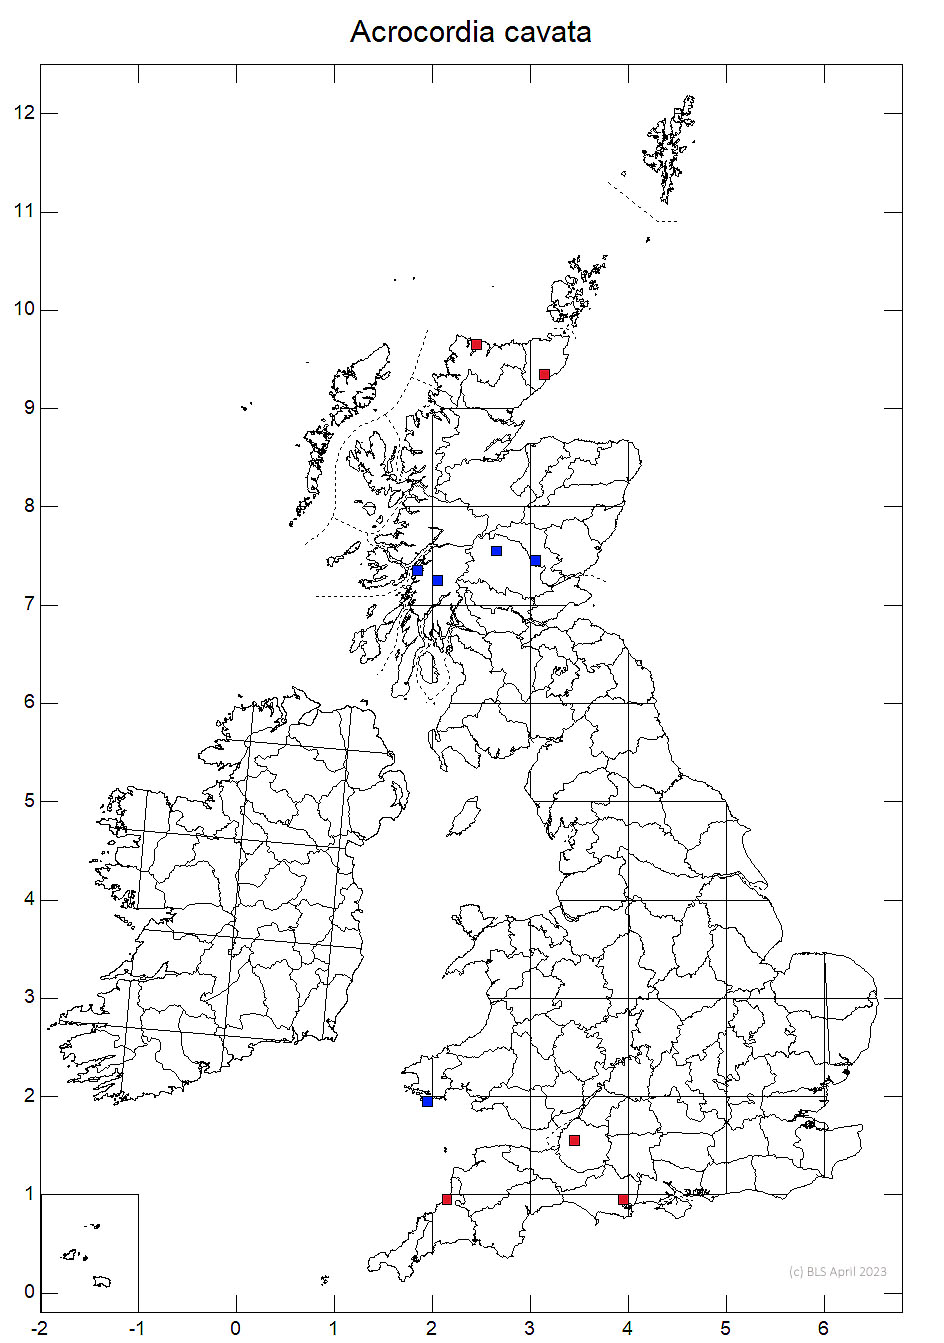 Acrocordia cavata 10km sq distribution map